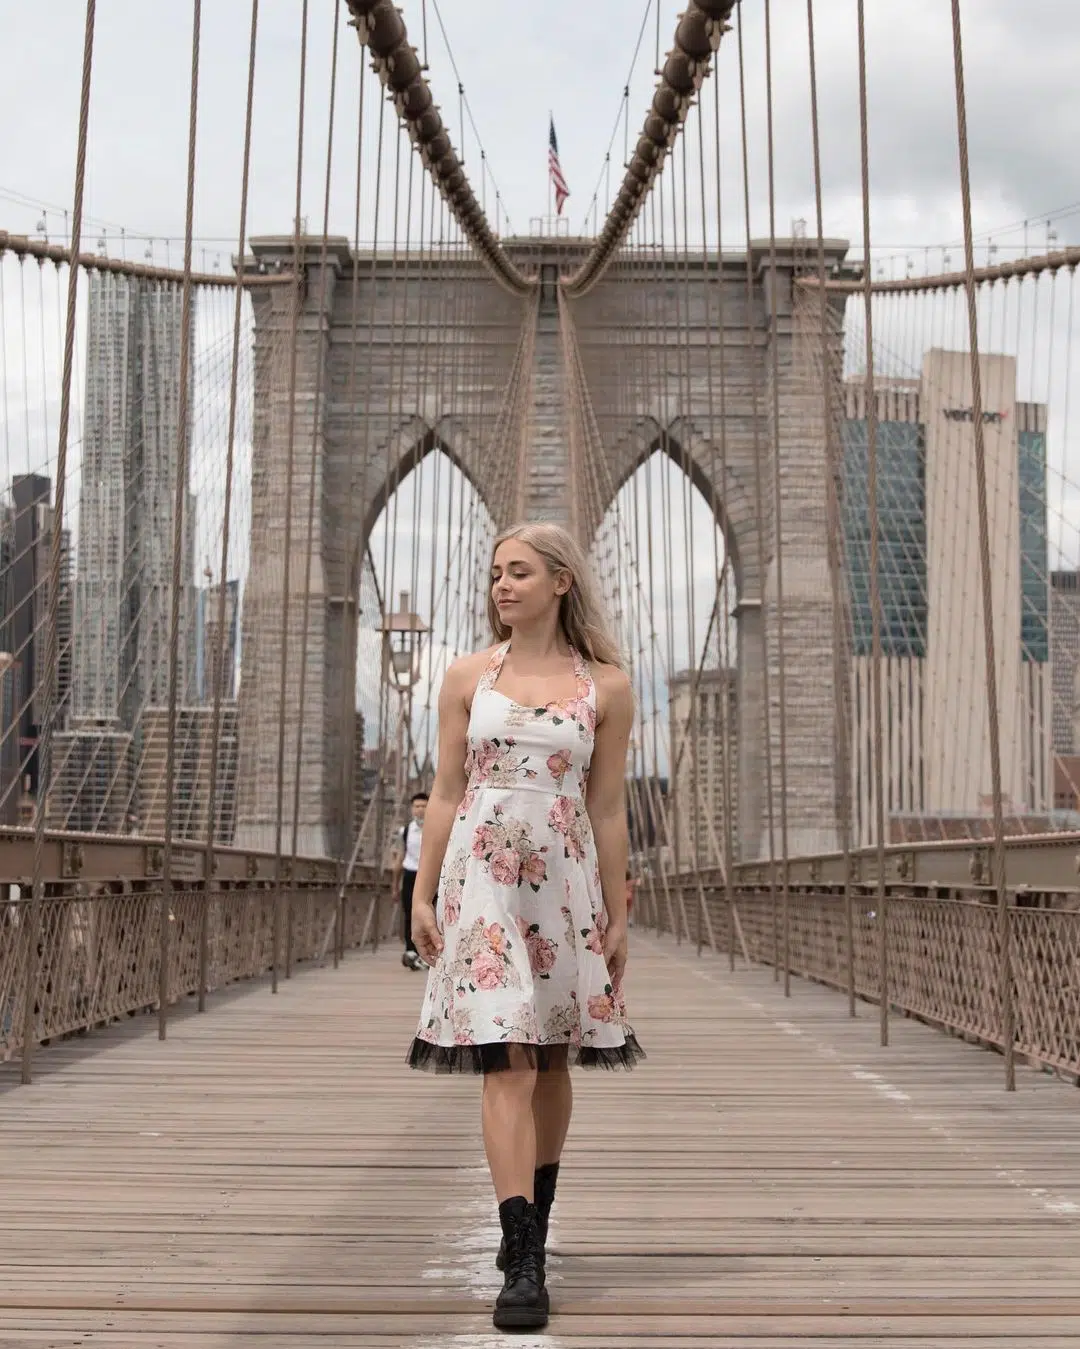 Melina posing on a beautiful bridge